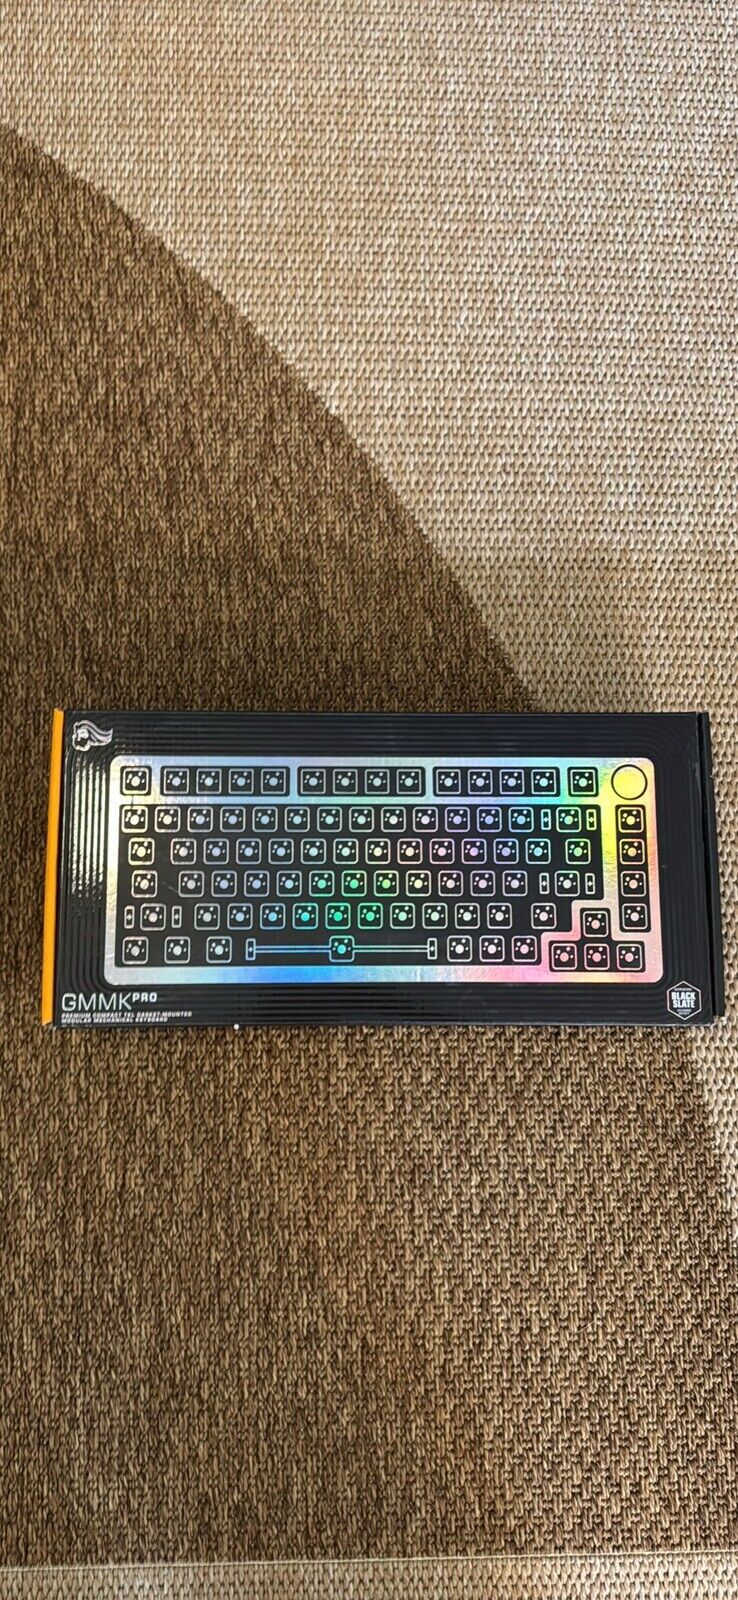 Glorious keyboard GMMK PRO